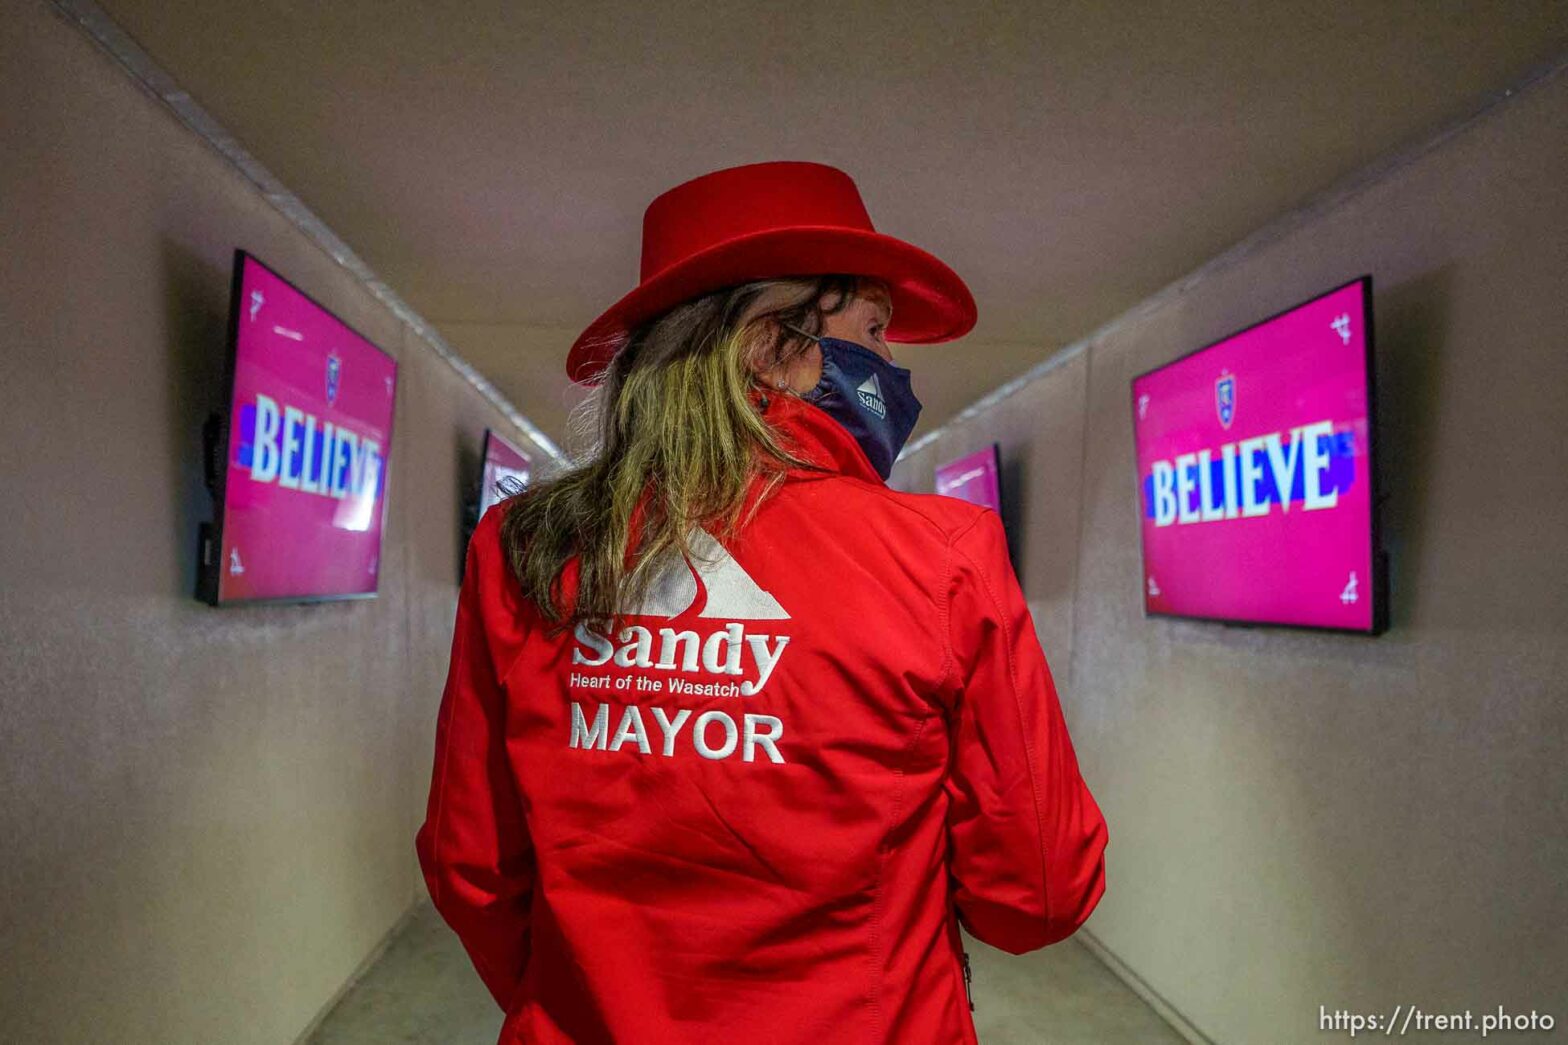 Sandy’s new mayor